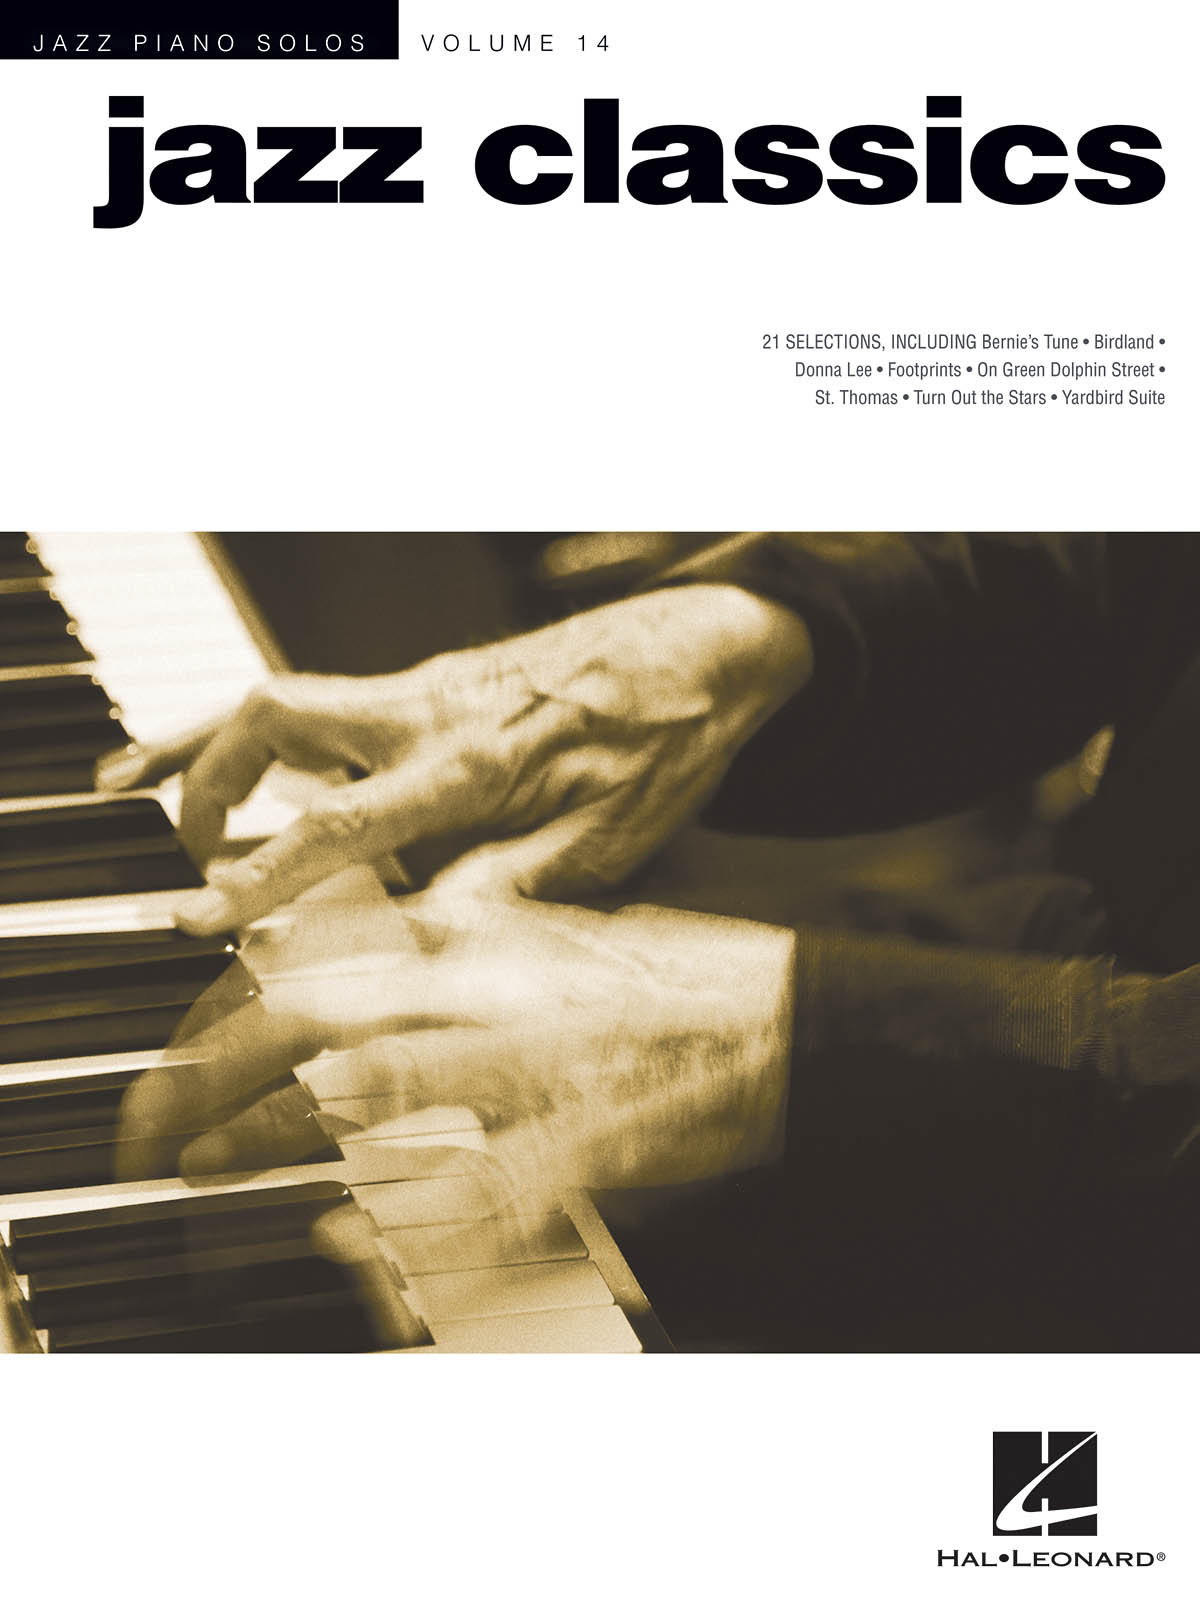 Jazz Piano Solos Series Volume 14: Jazz Classics